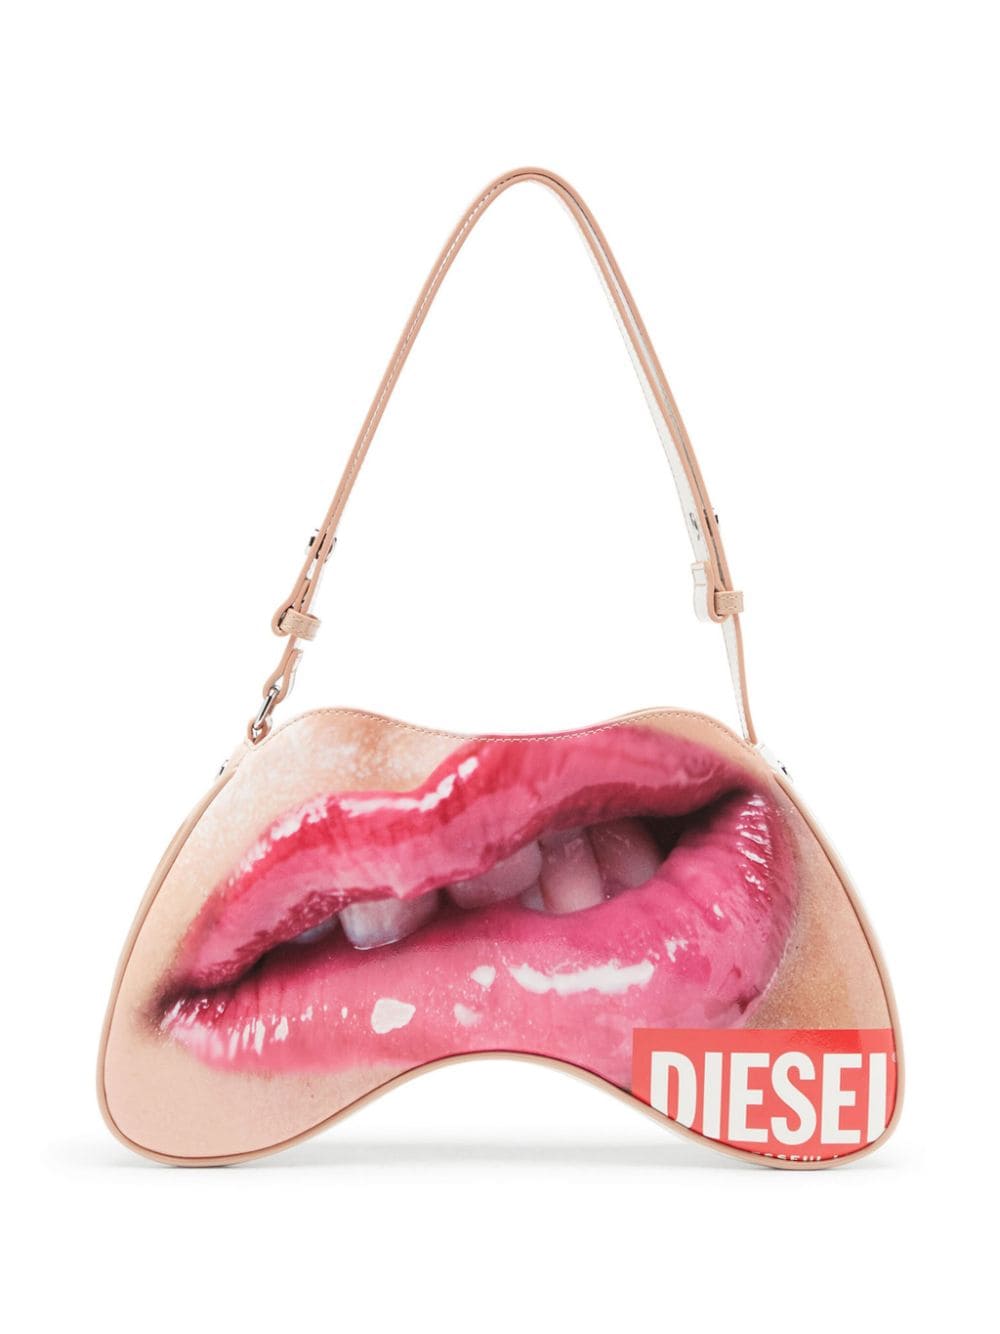 Diesel Play schoudertas met lippen patroon Beige